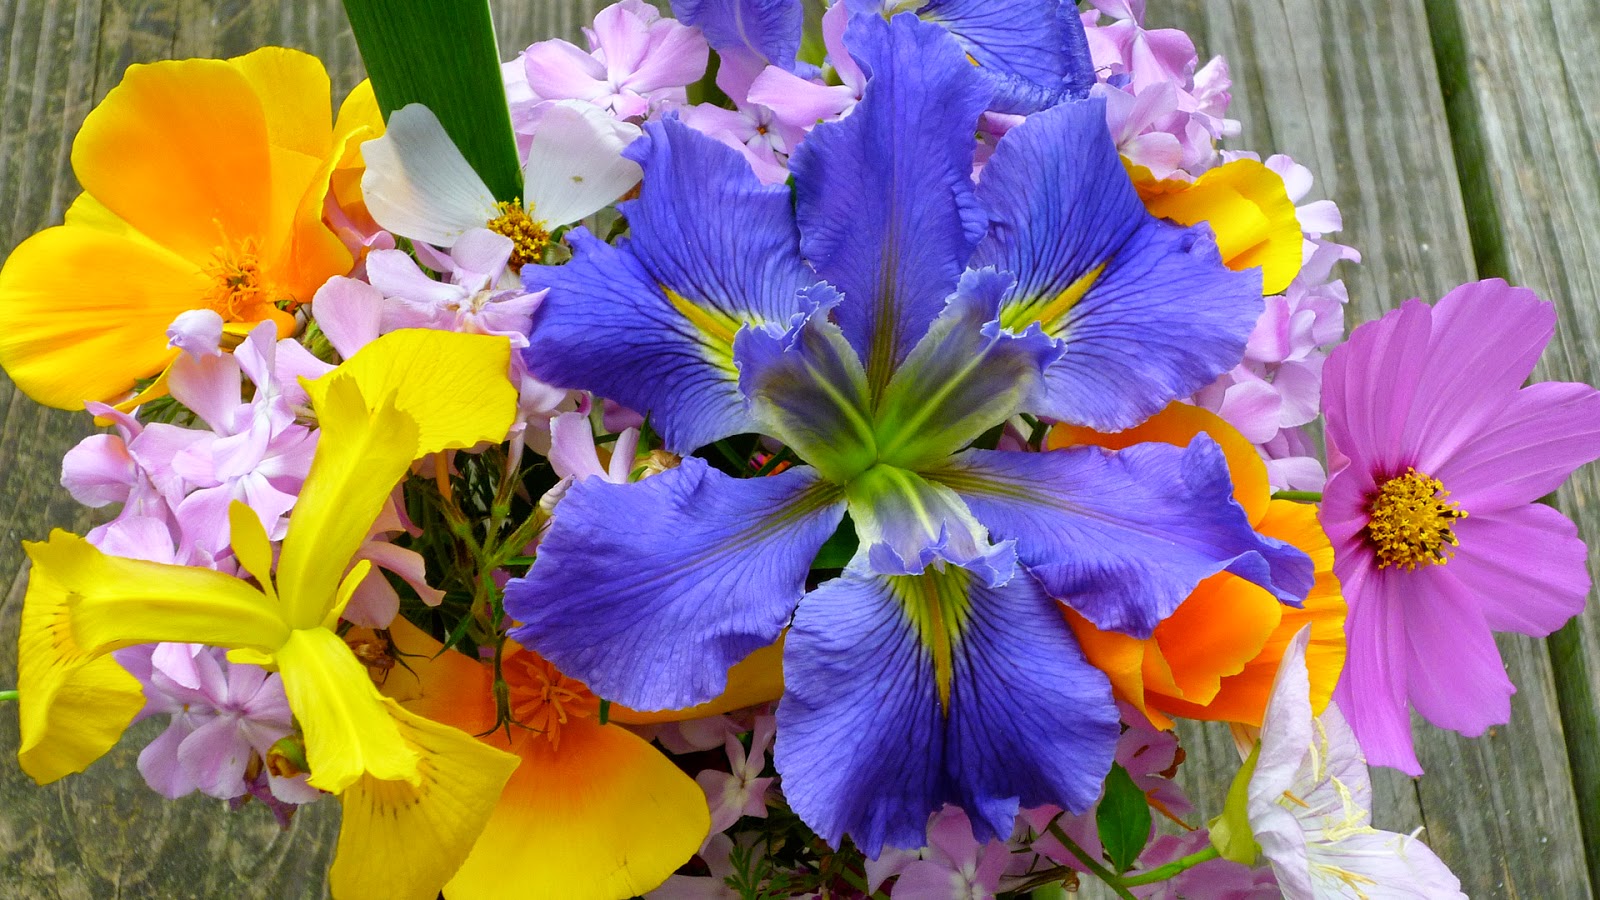 Critter Sitter's Blog: Photos of Spring Flowers